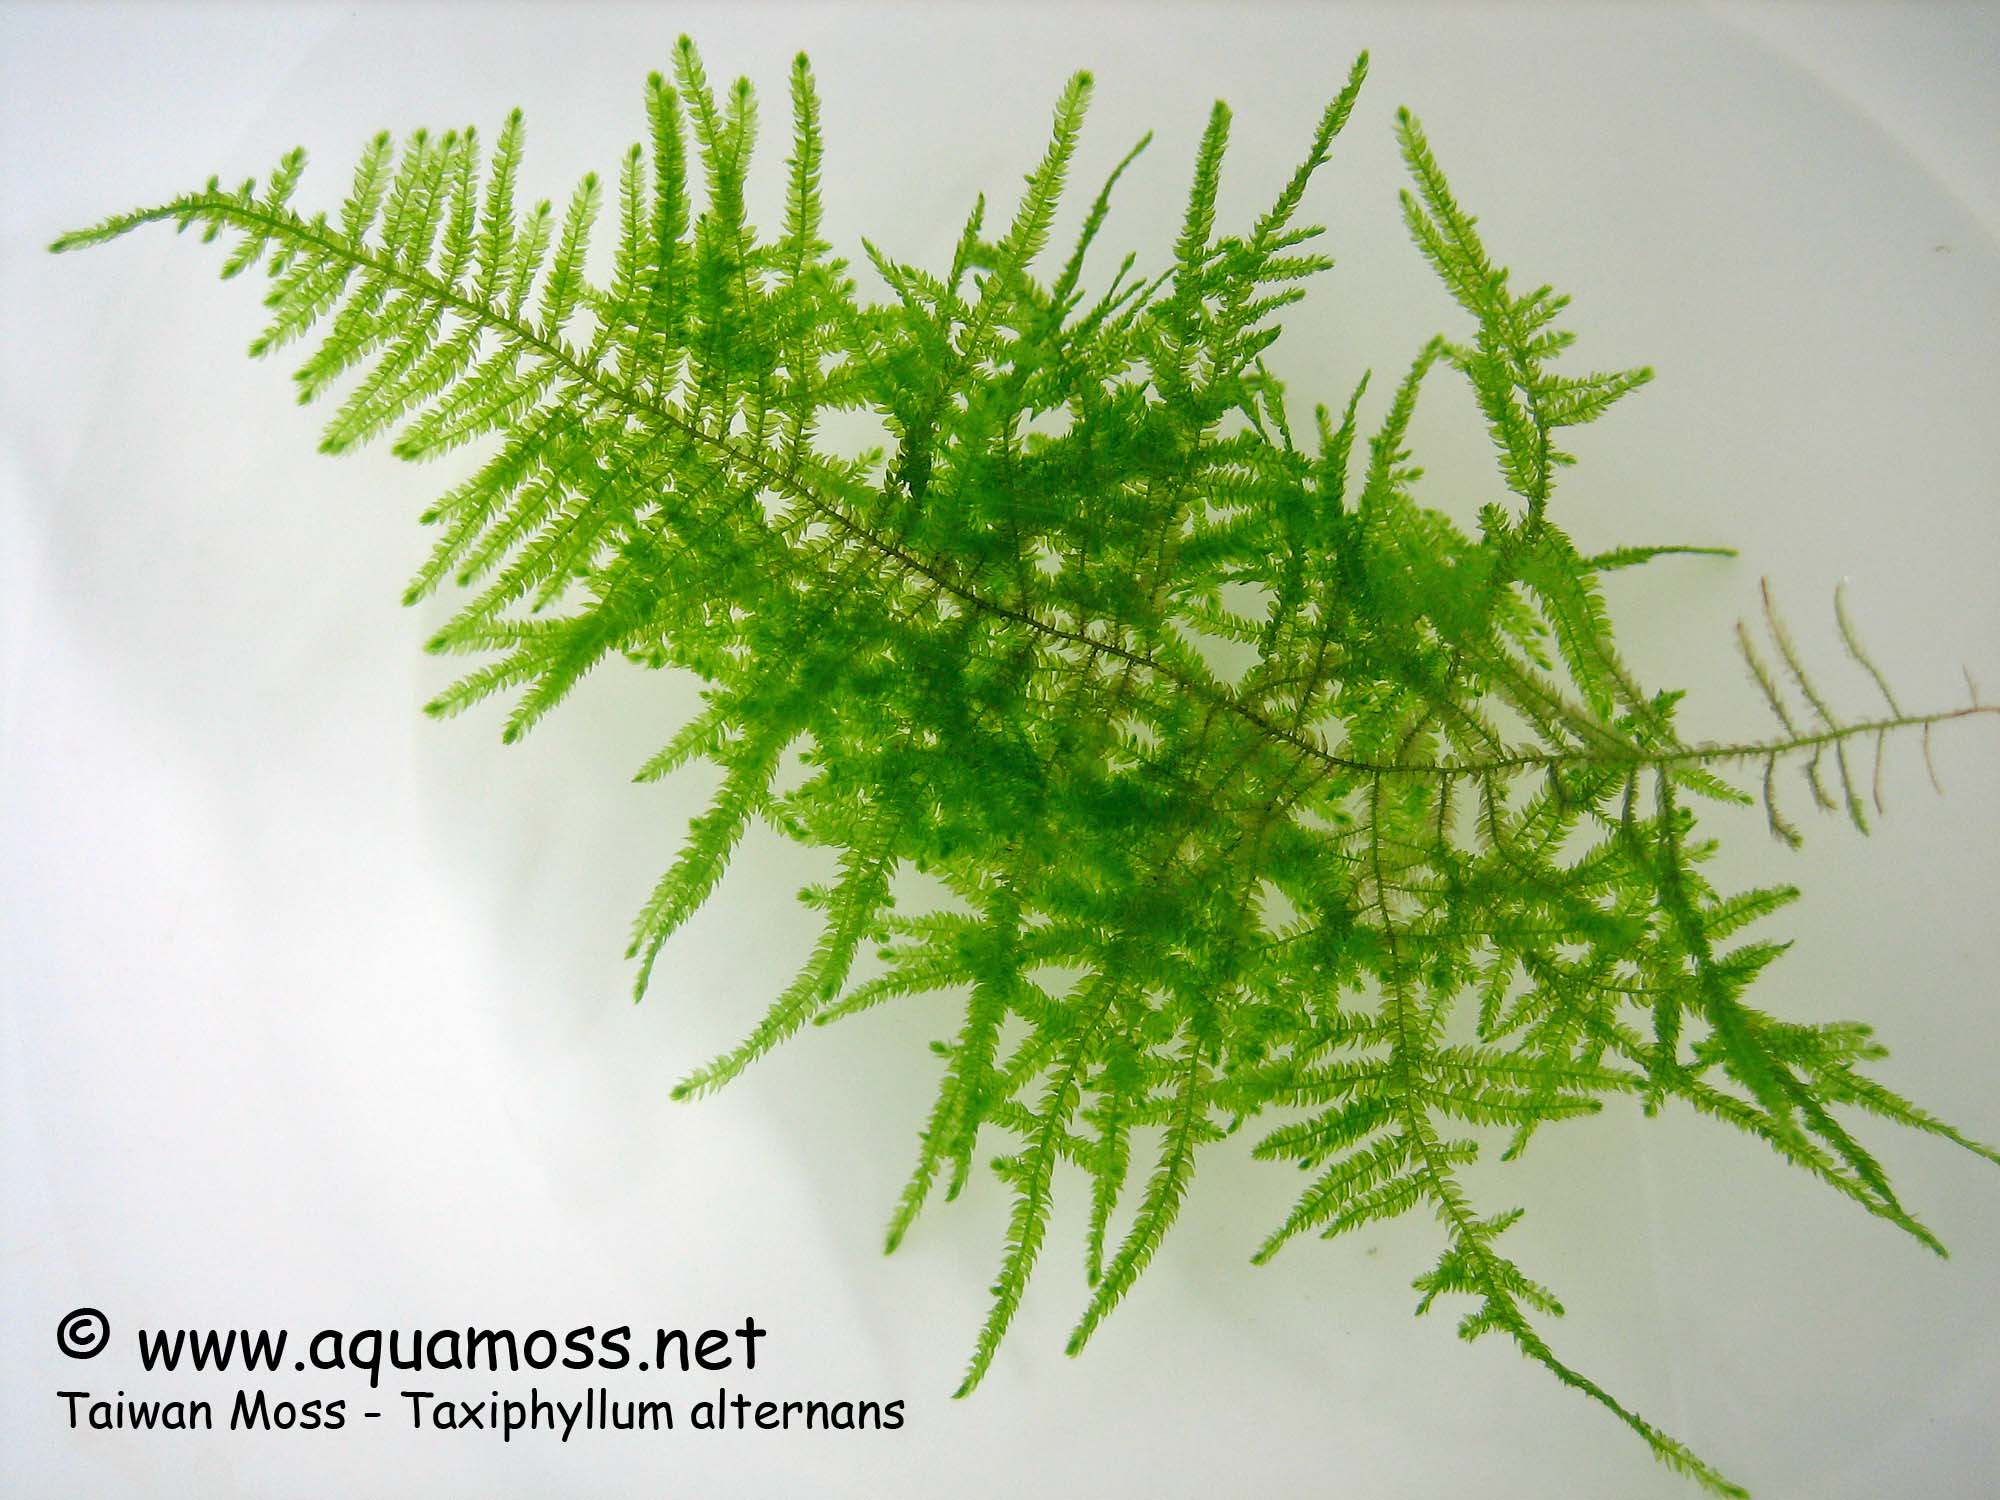 http://www.aquamoss.net/Taiwan-Moss/images/Taiwan-Moss-Closeup-01.jpg